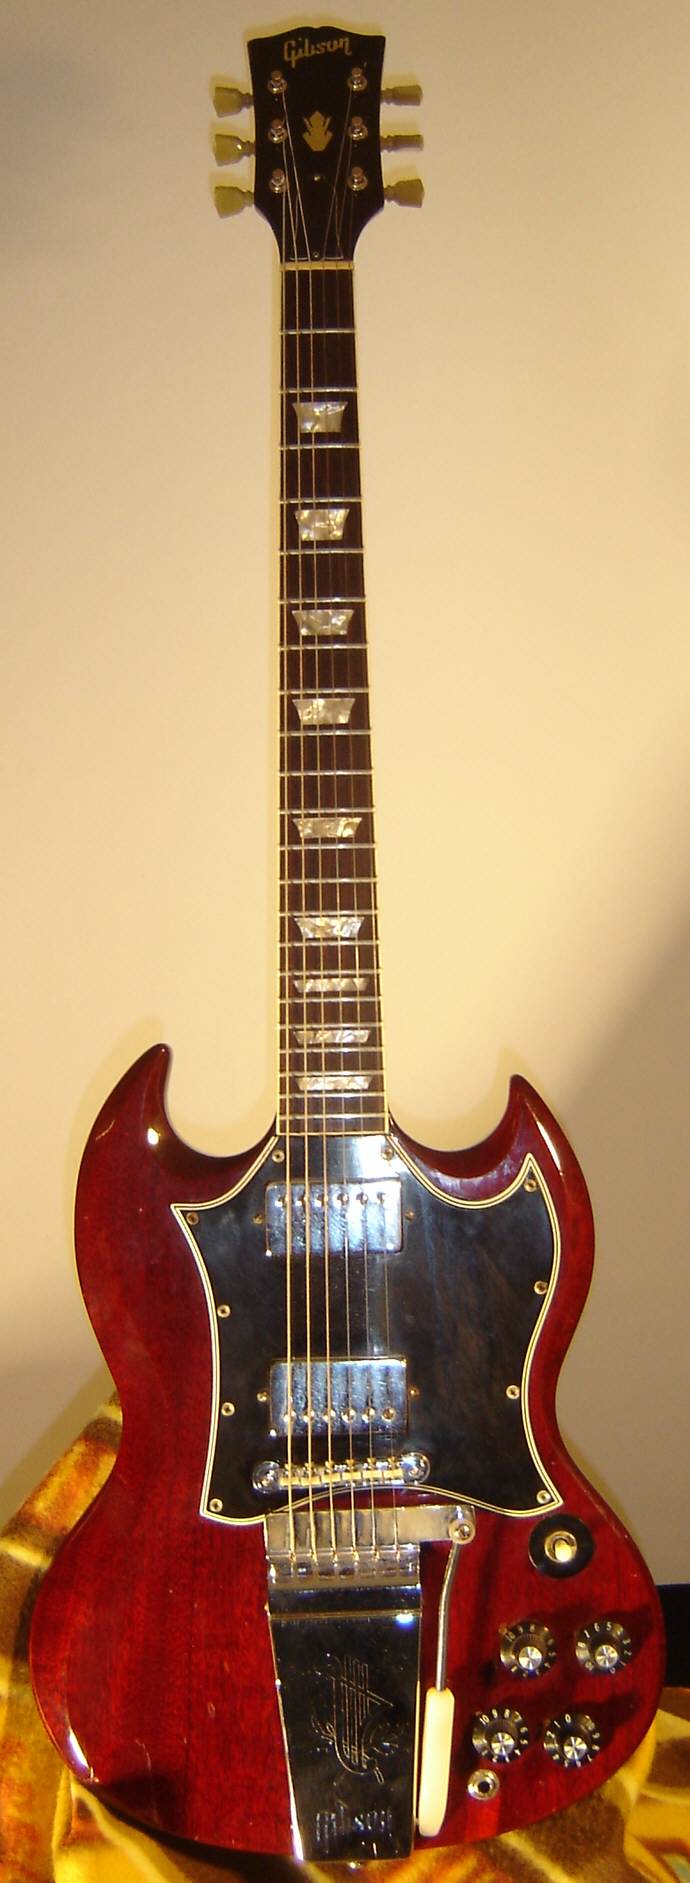 Gibson-SG-Standard-1967.jpg